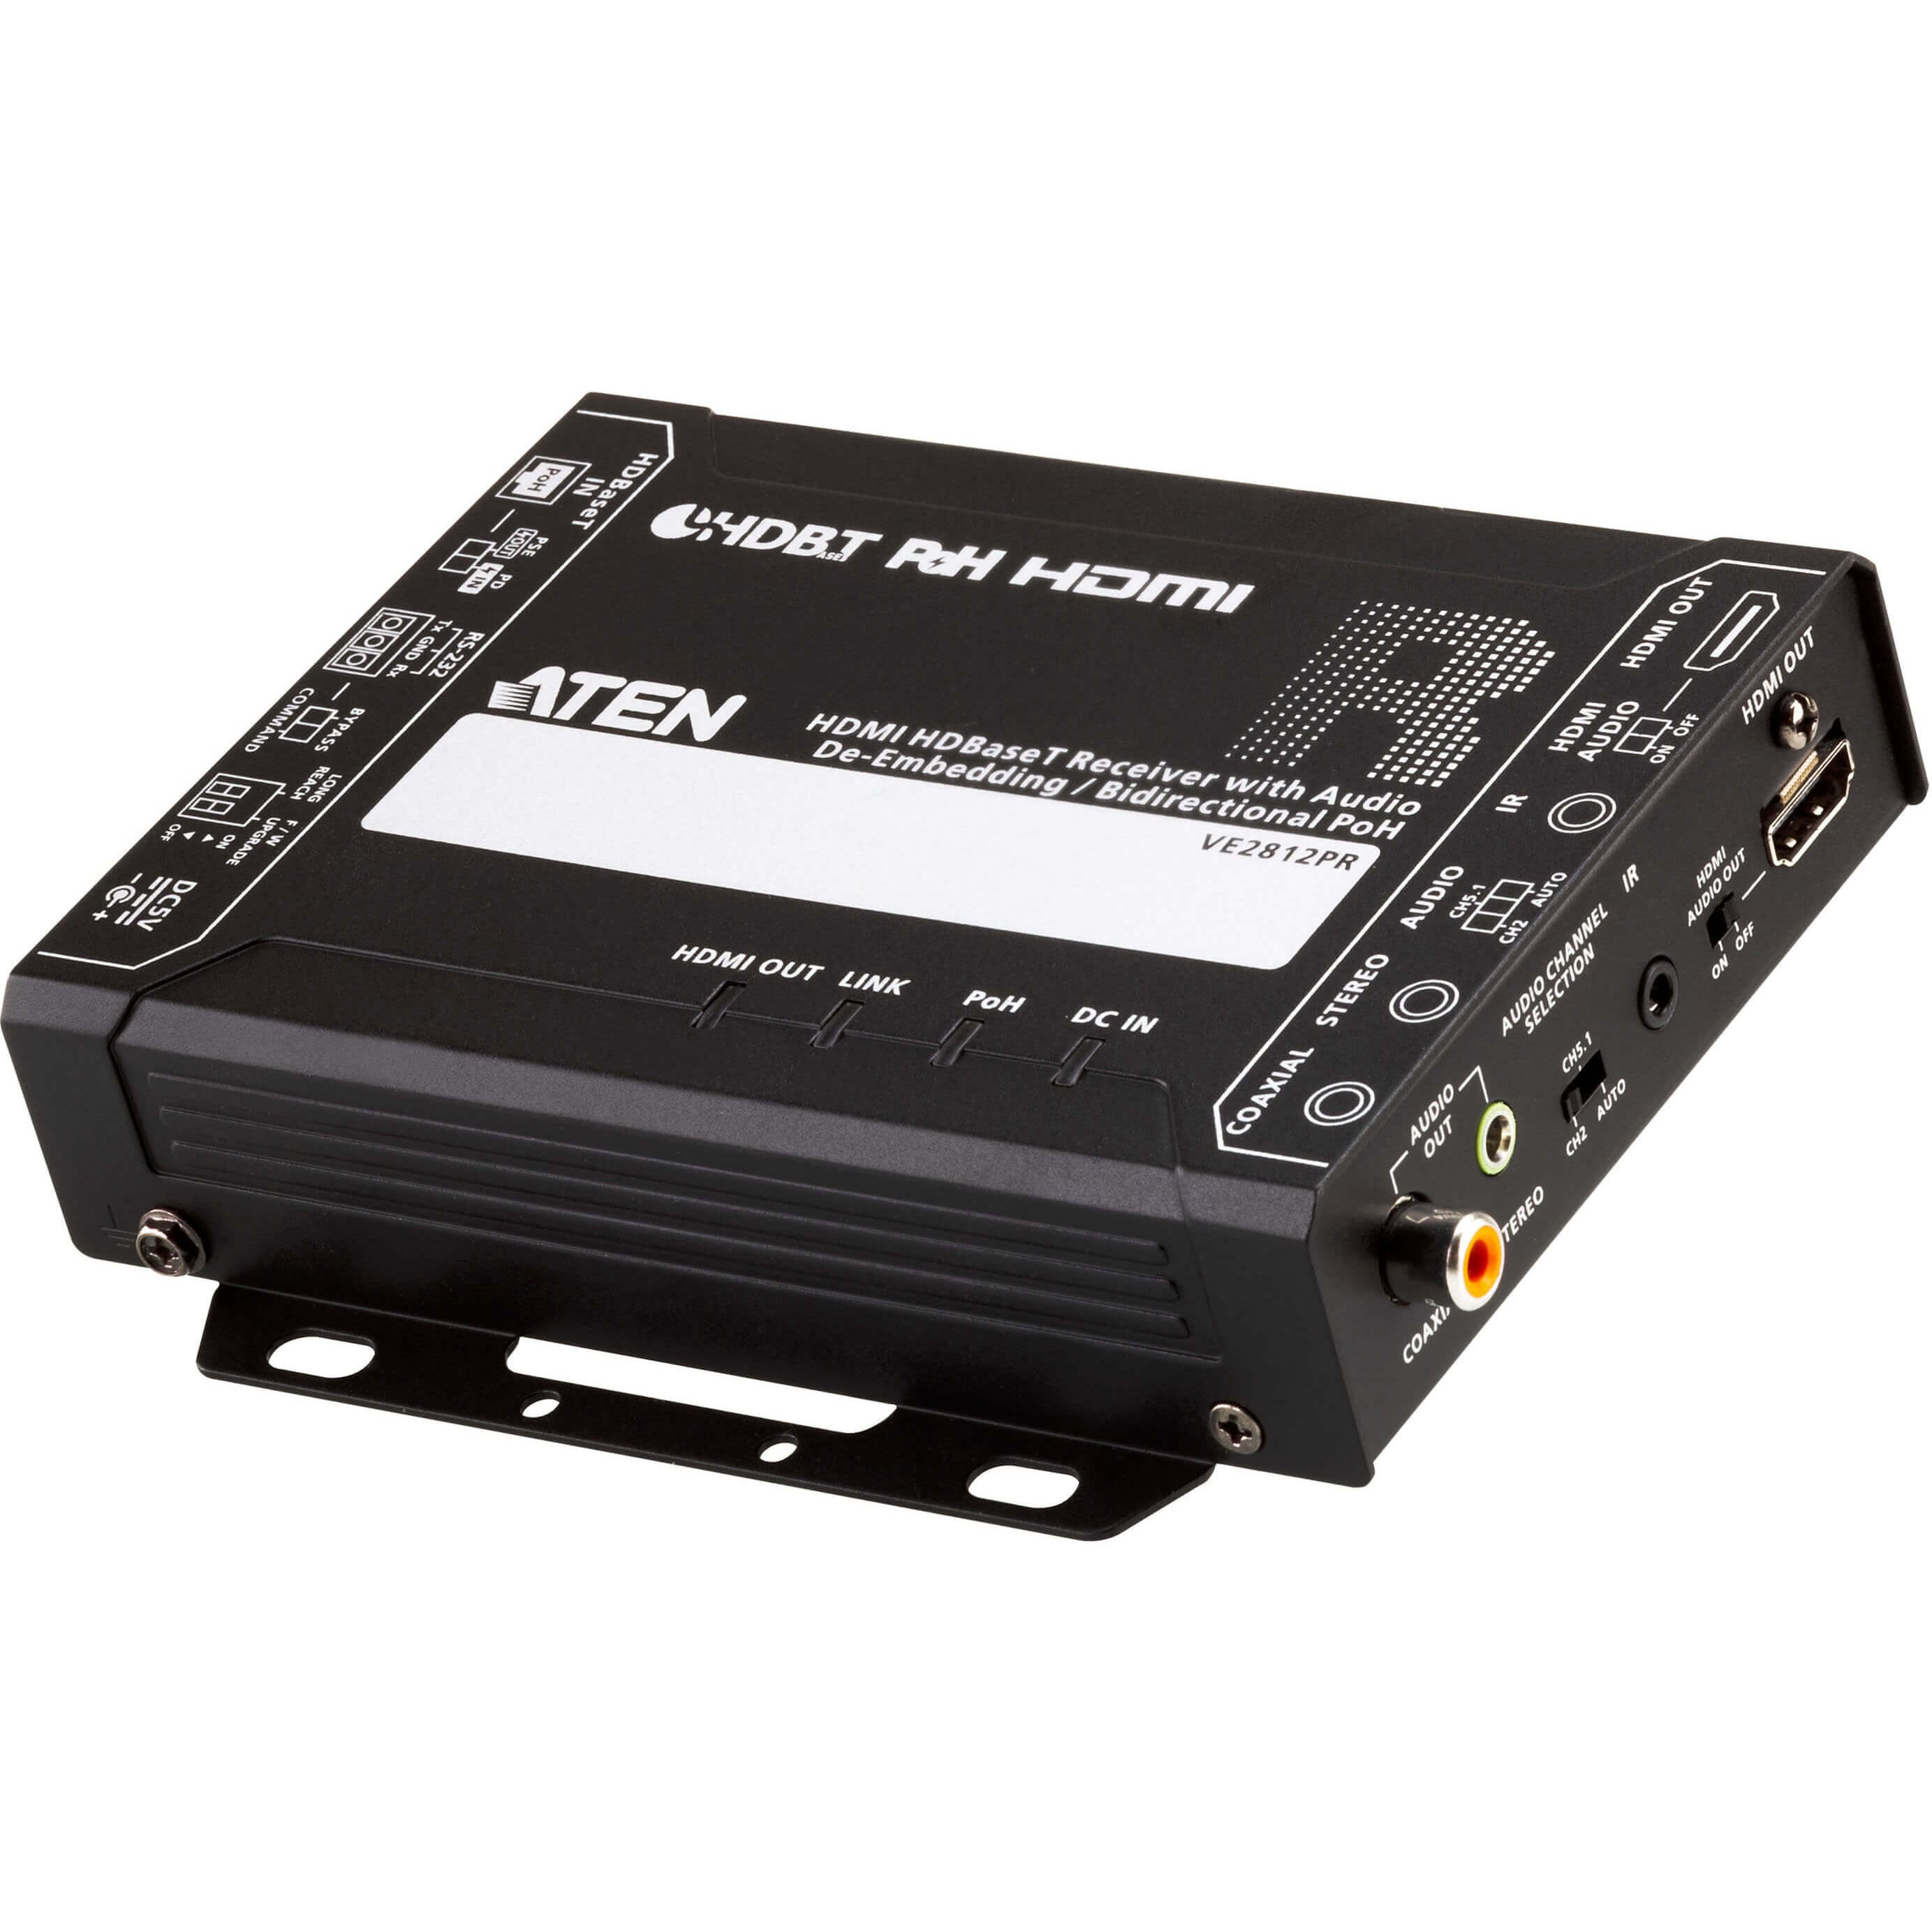   Dport vido   HDMI 4K HDBaseT Receiver 100m Audio PoH IR RS-232 VE2812PR-AT-G